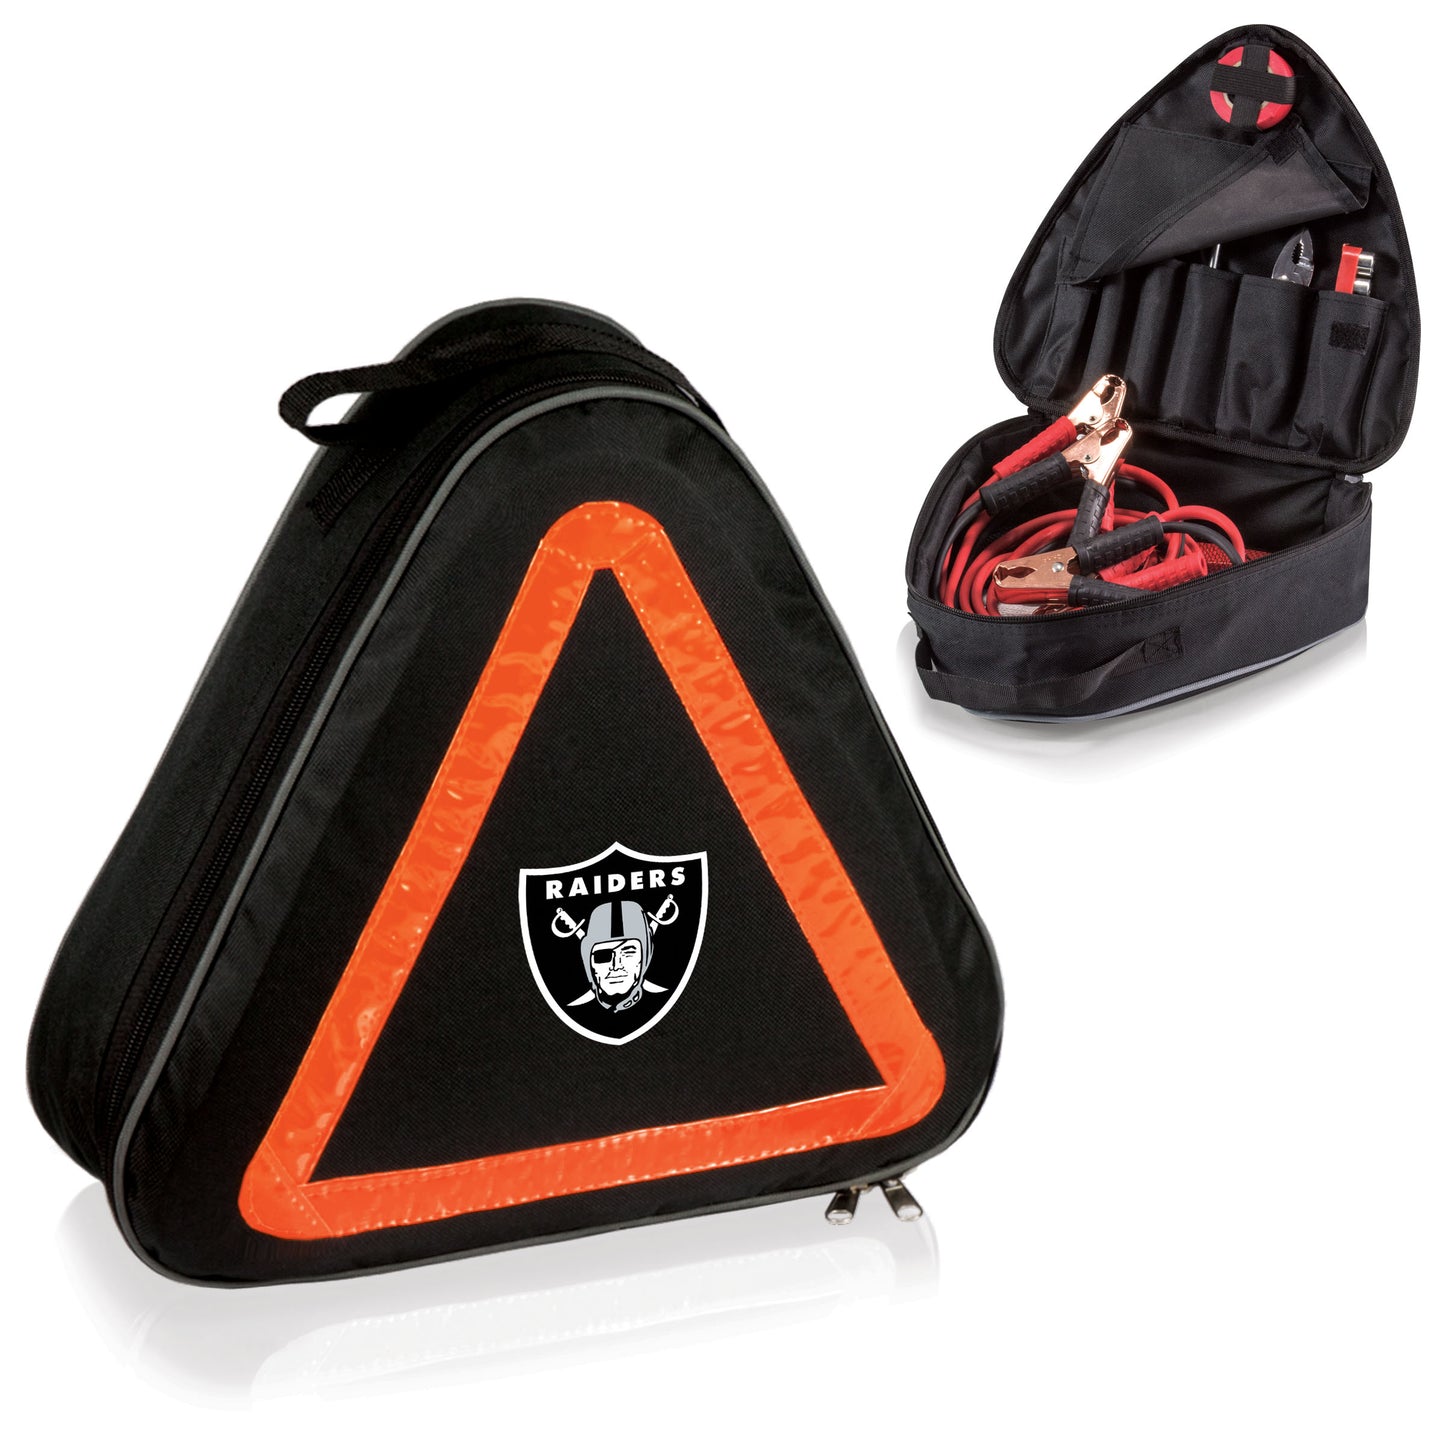 Las Vegas Raiders Roadside Emergency Car Kit, (Black with Orange Accents)